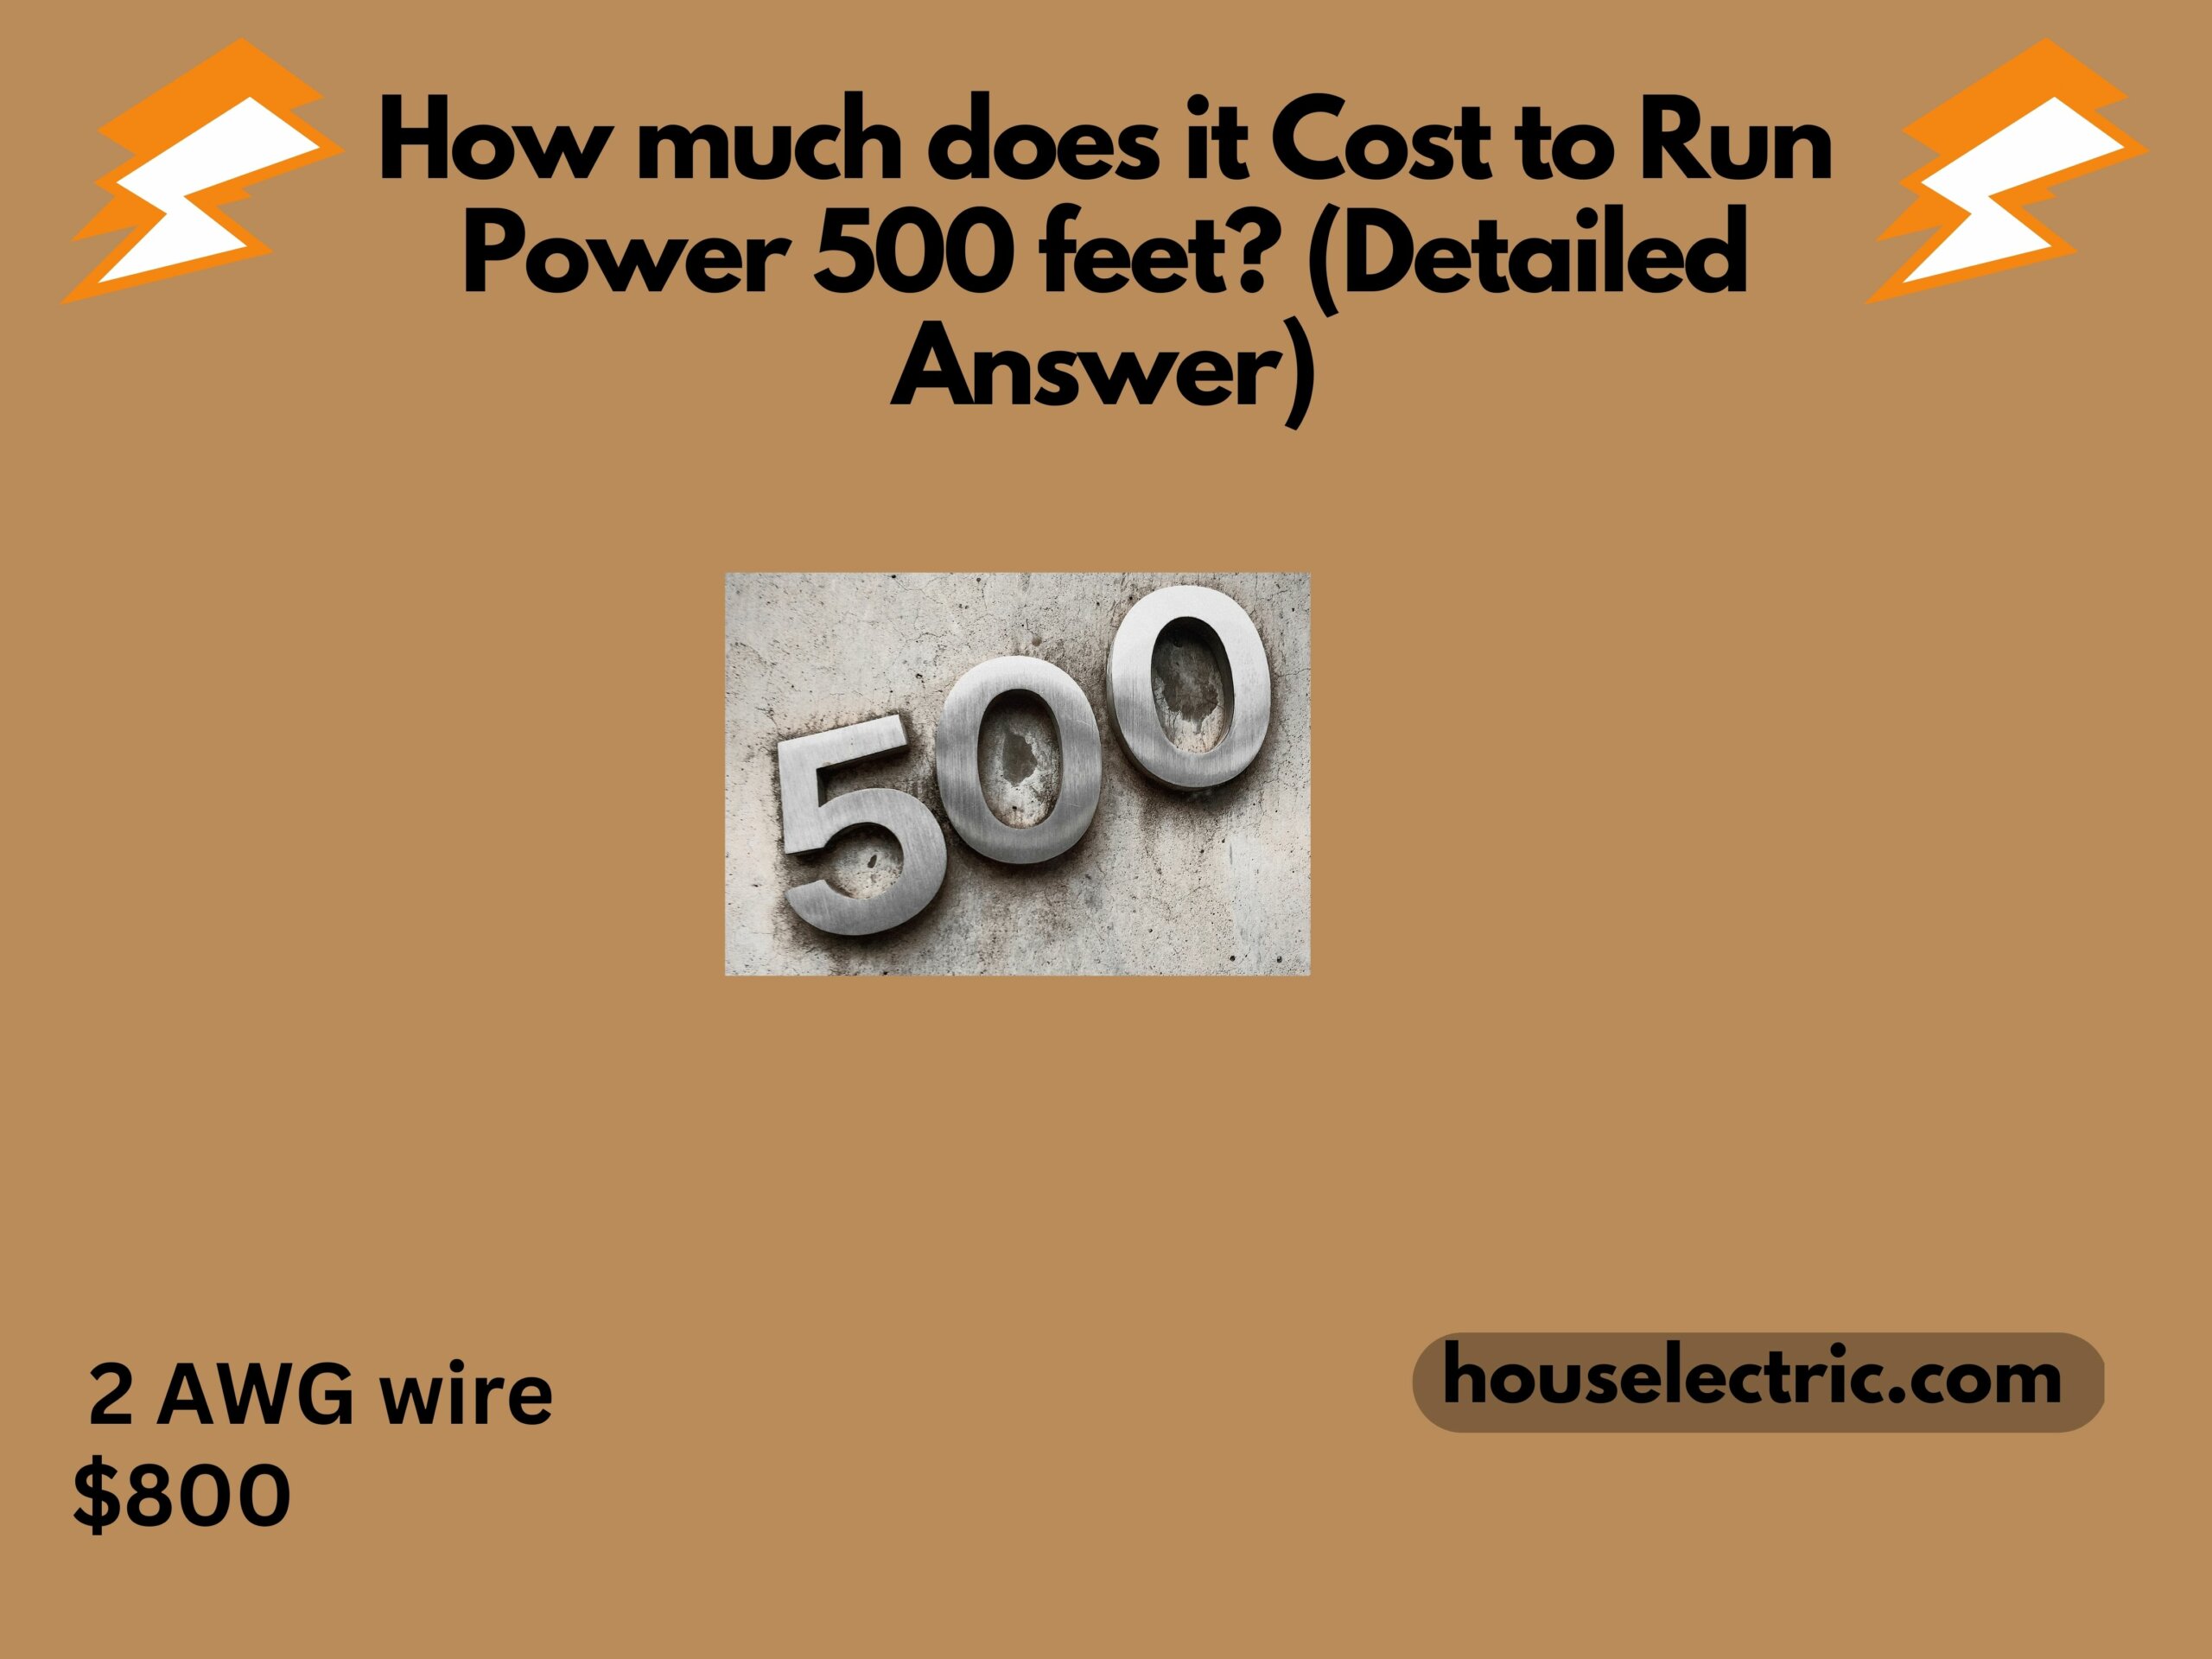 Cost to run power 500 feet